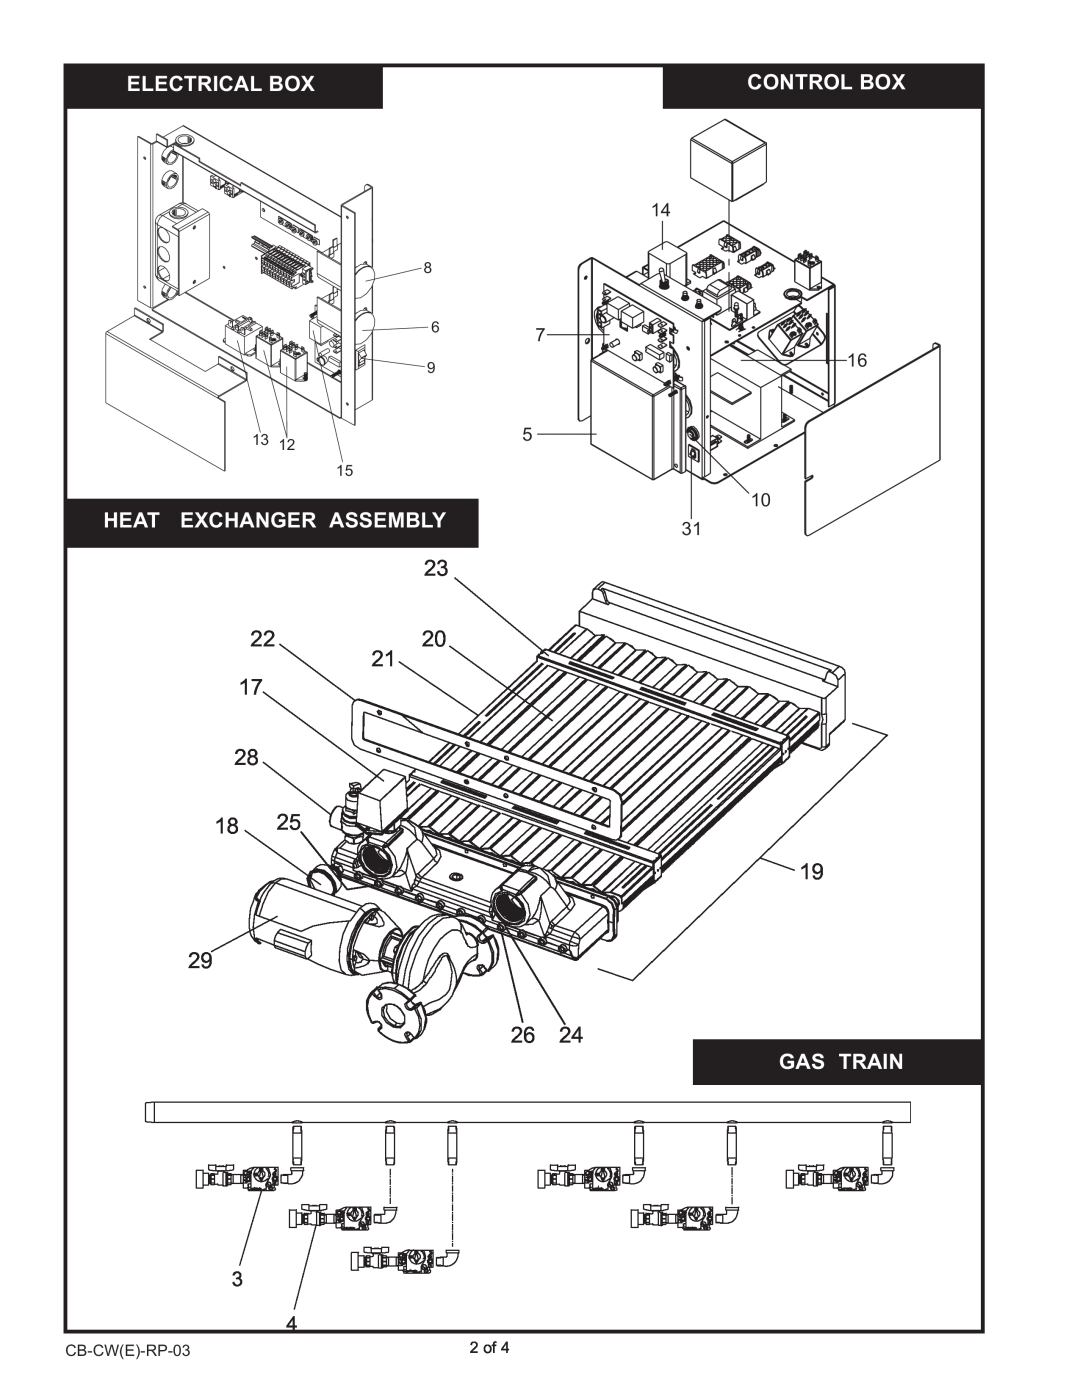 Lochinvar CB986-2066 manual Electrical Box, Control Box, Exchanger Assembly, Gas Train, Heat 